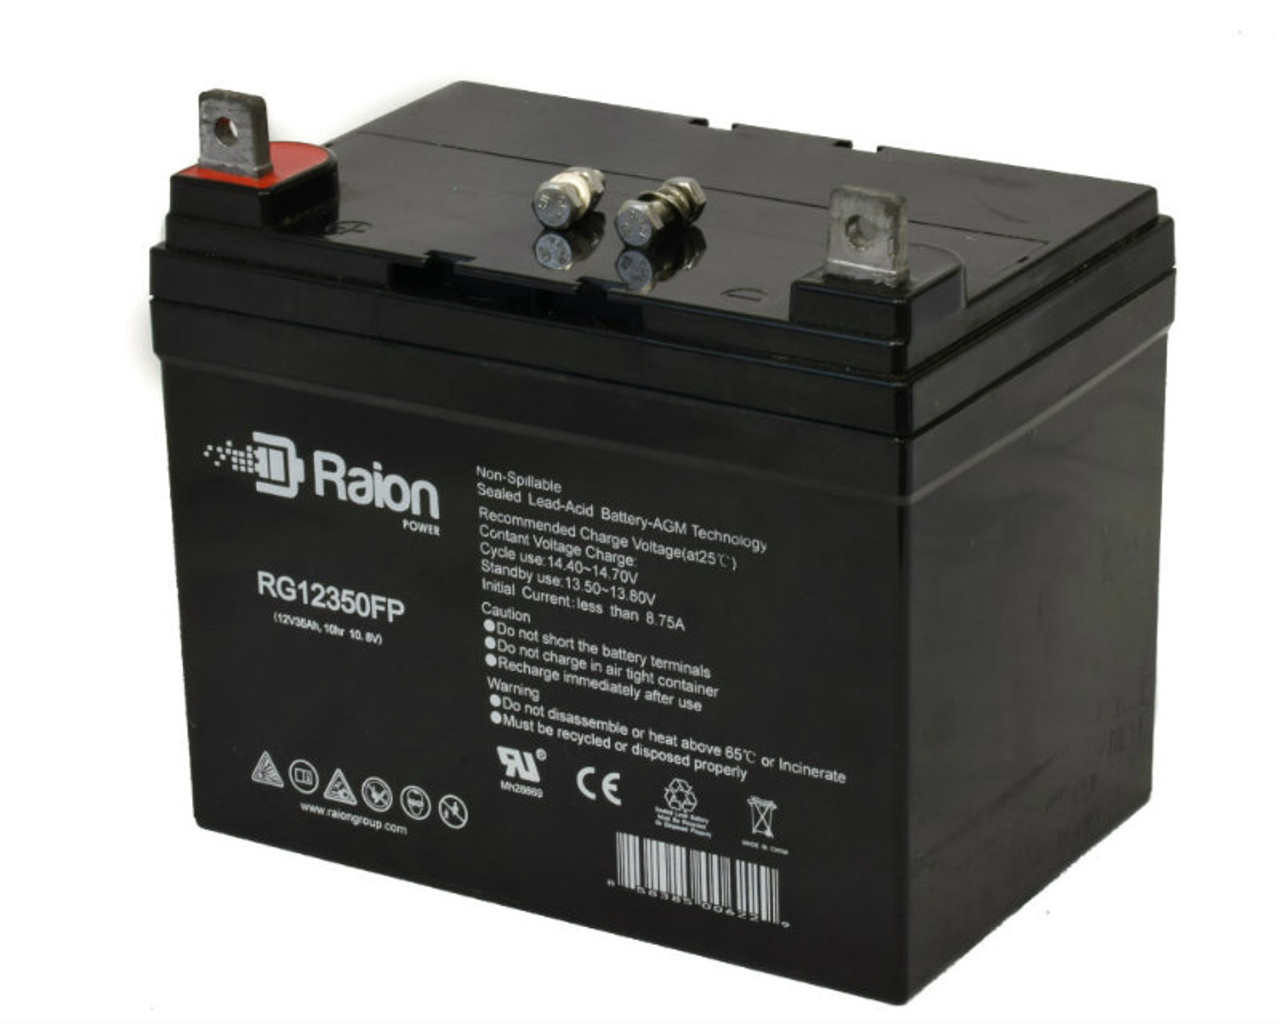 Raion Power Replacement 12V 35Ah Battery for Simplicity REGENT 16H GARDEN - 1 Pack